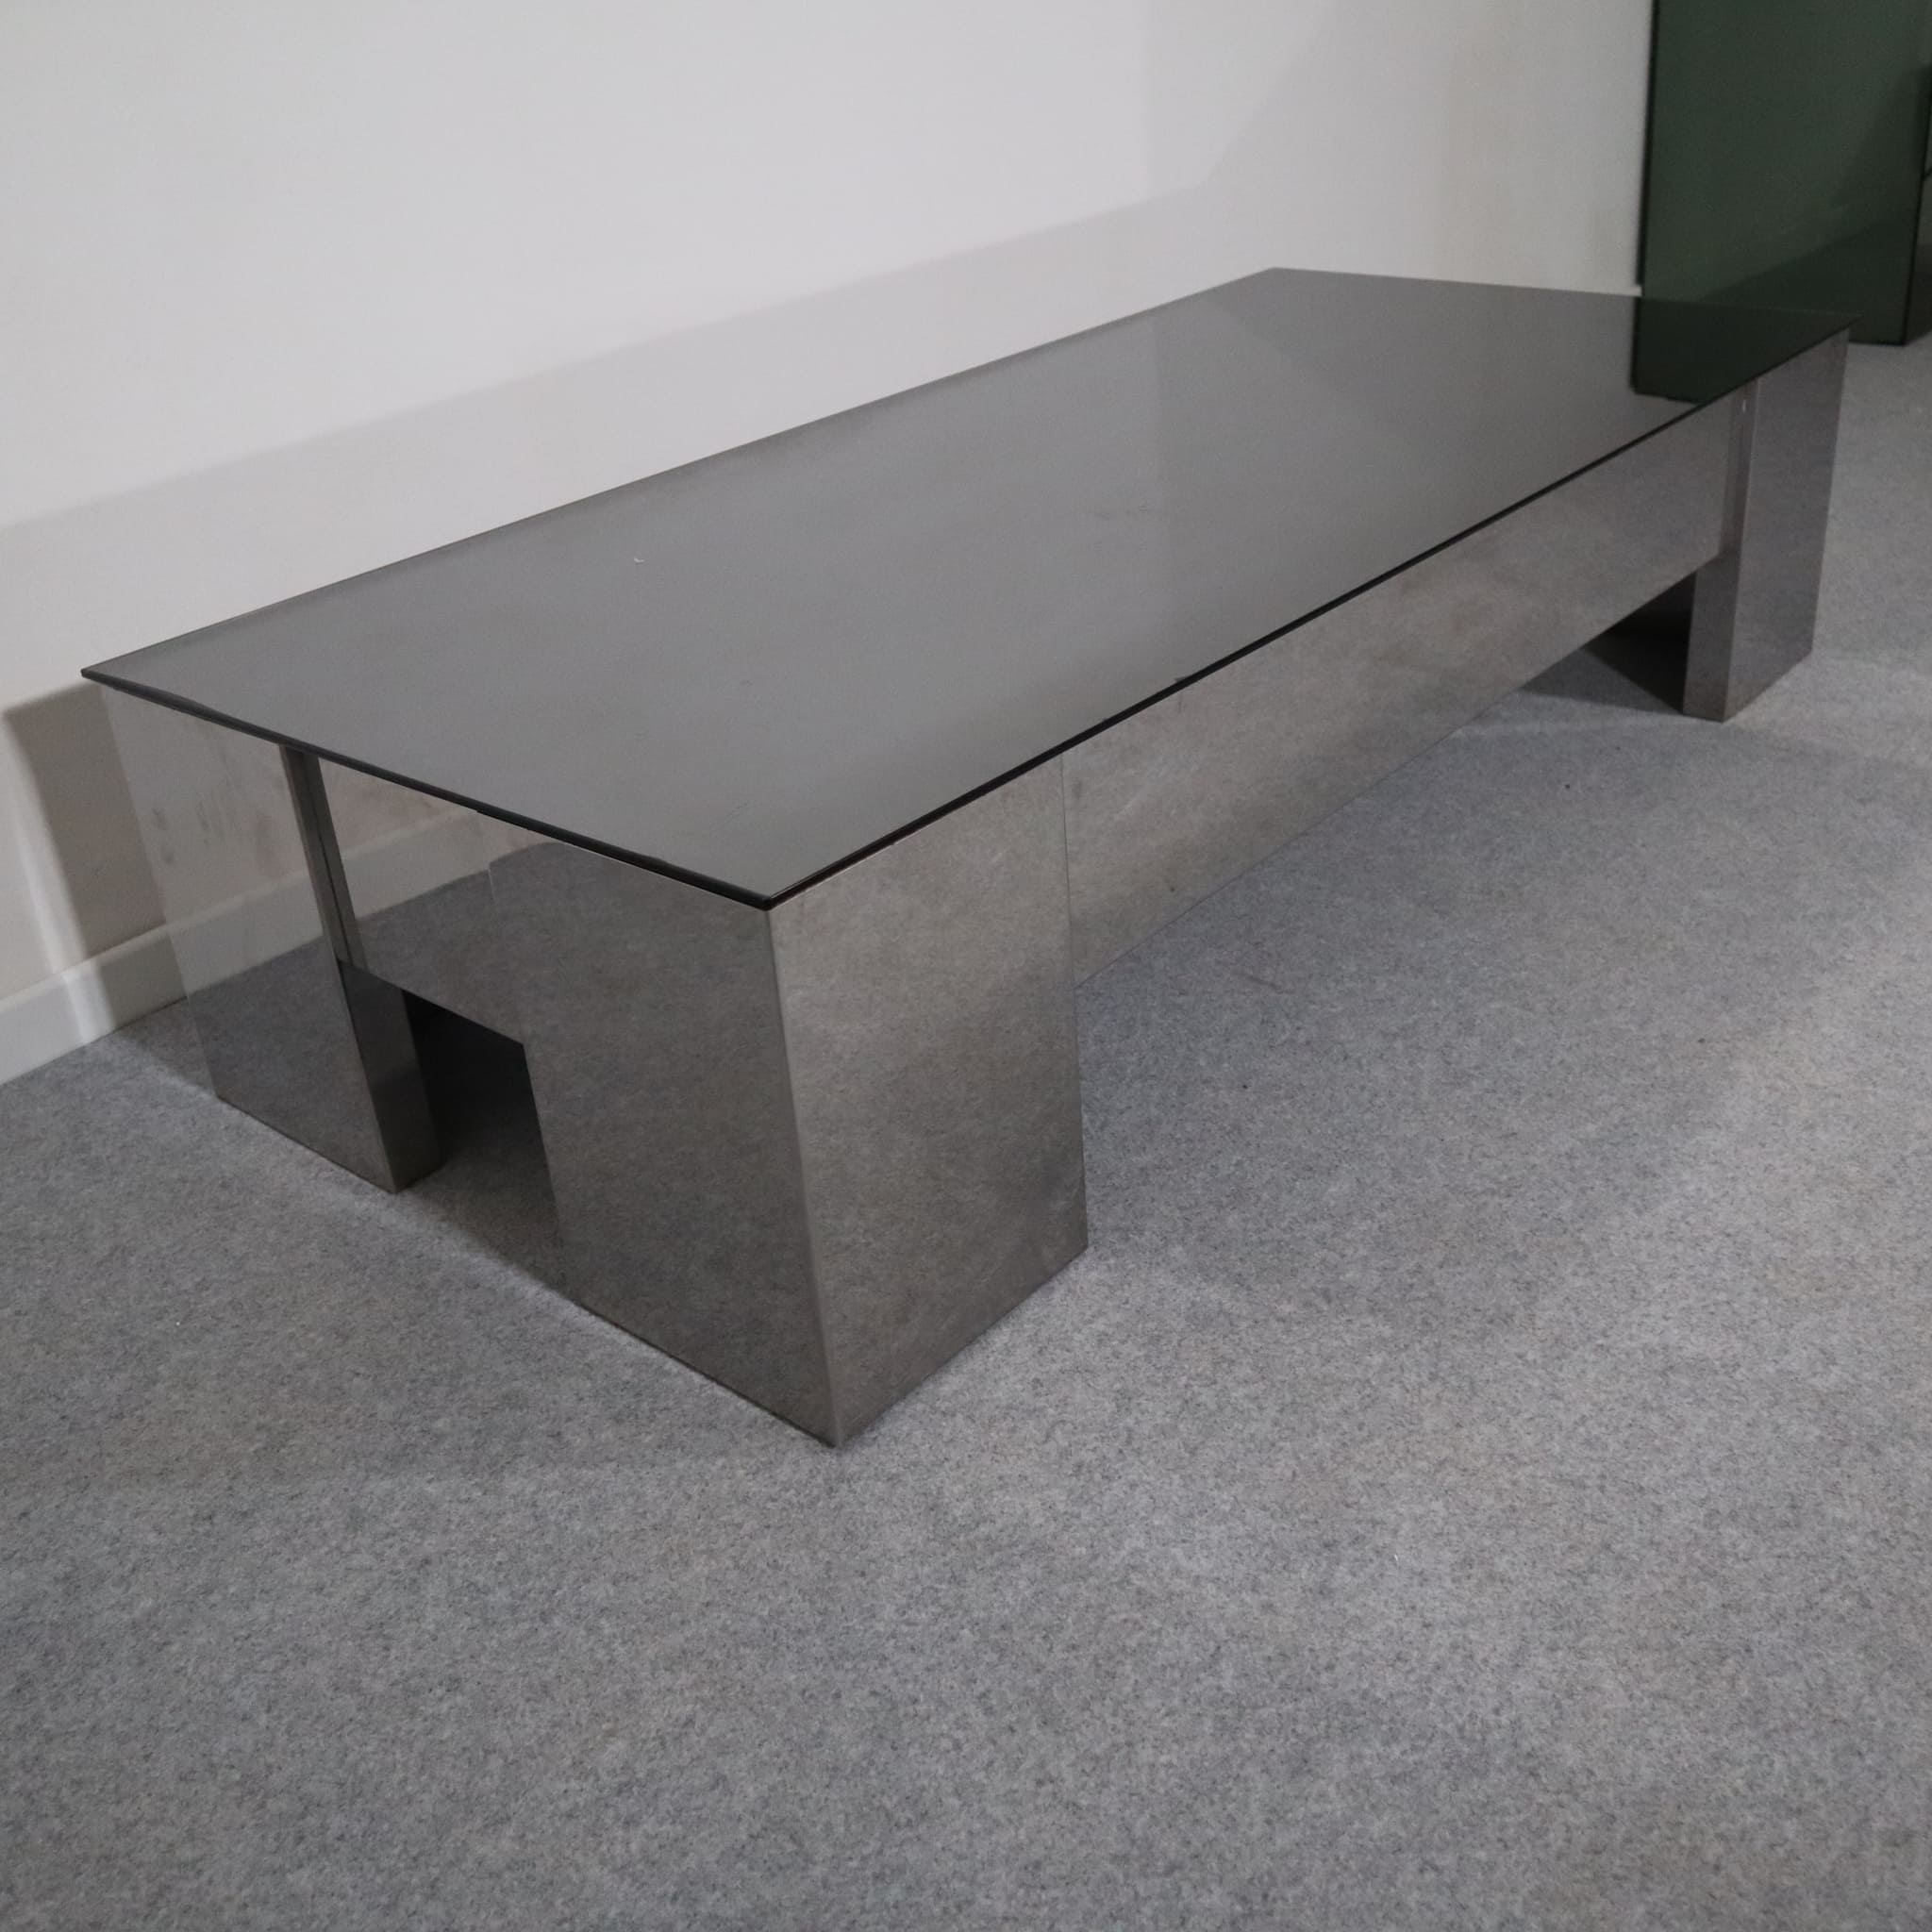 visioni-visionidepoca-depoca-coffee table-steel-smoked-mirror-70s-made-italy-furniture-design-modern-vintage-3